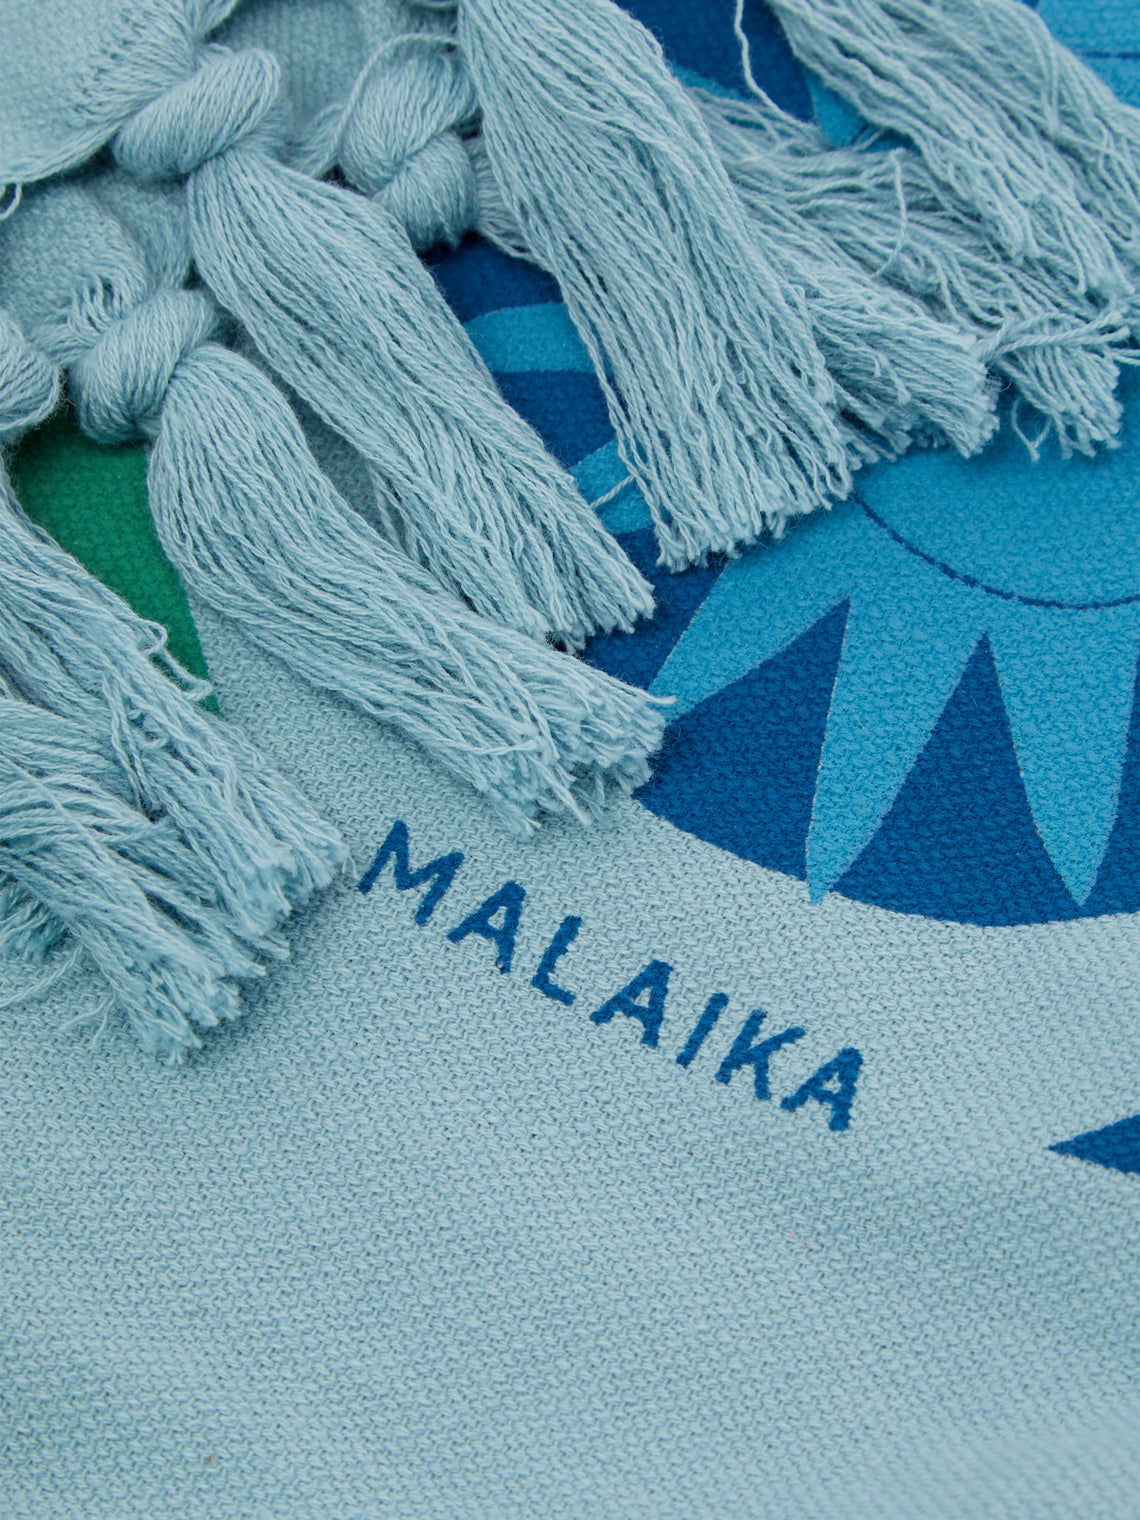 Malaika - Sunshine Hand-Printed Cotton Beach Towels (Set of 2) -  - ABASK